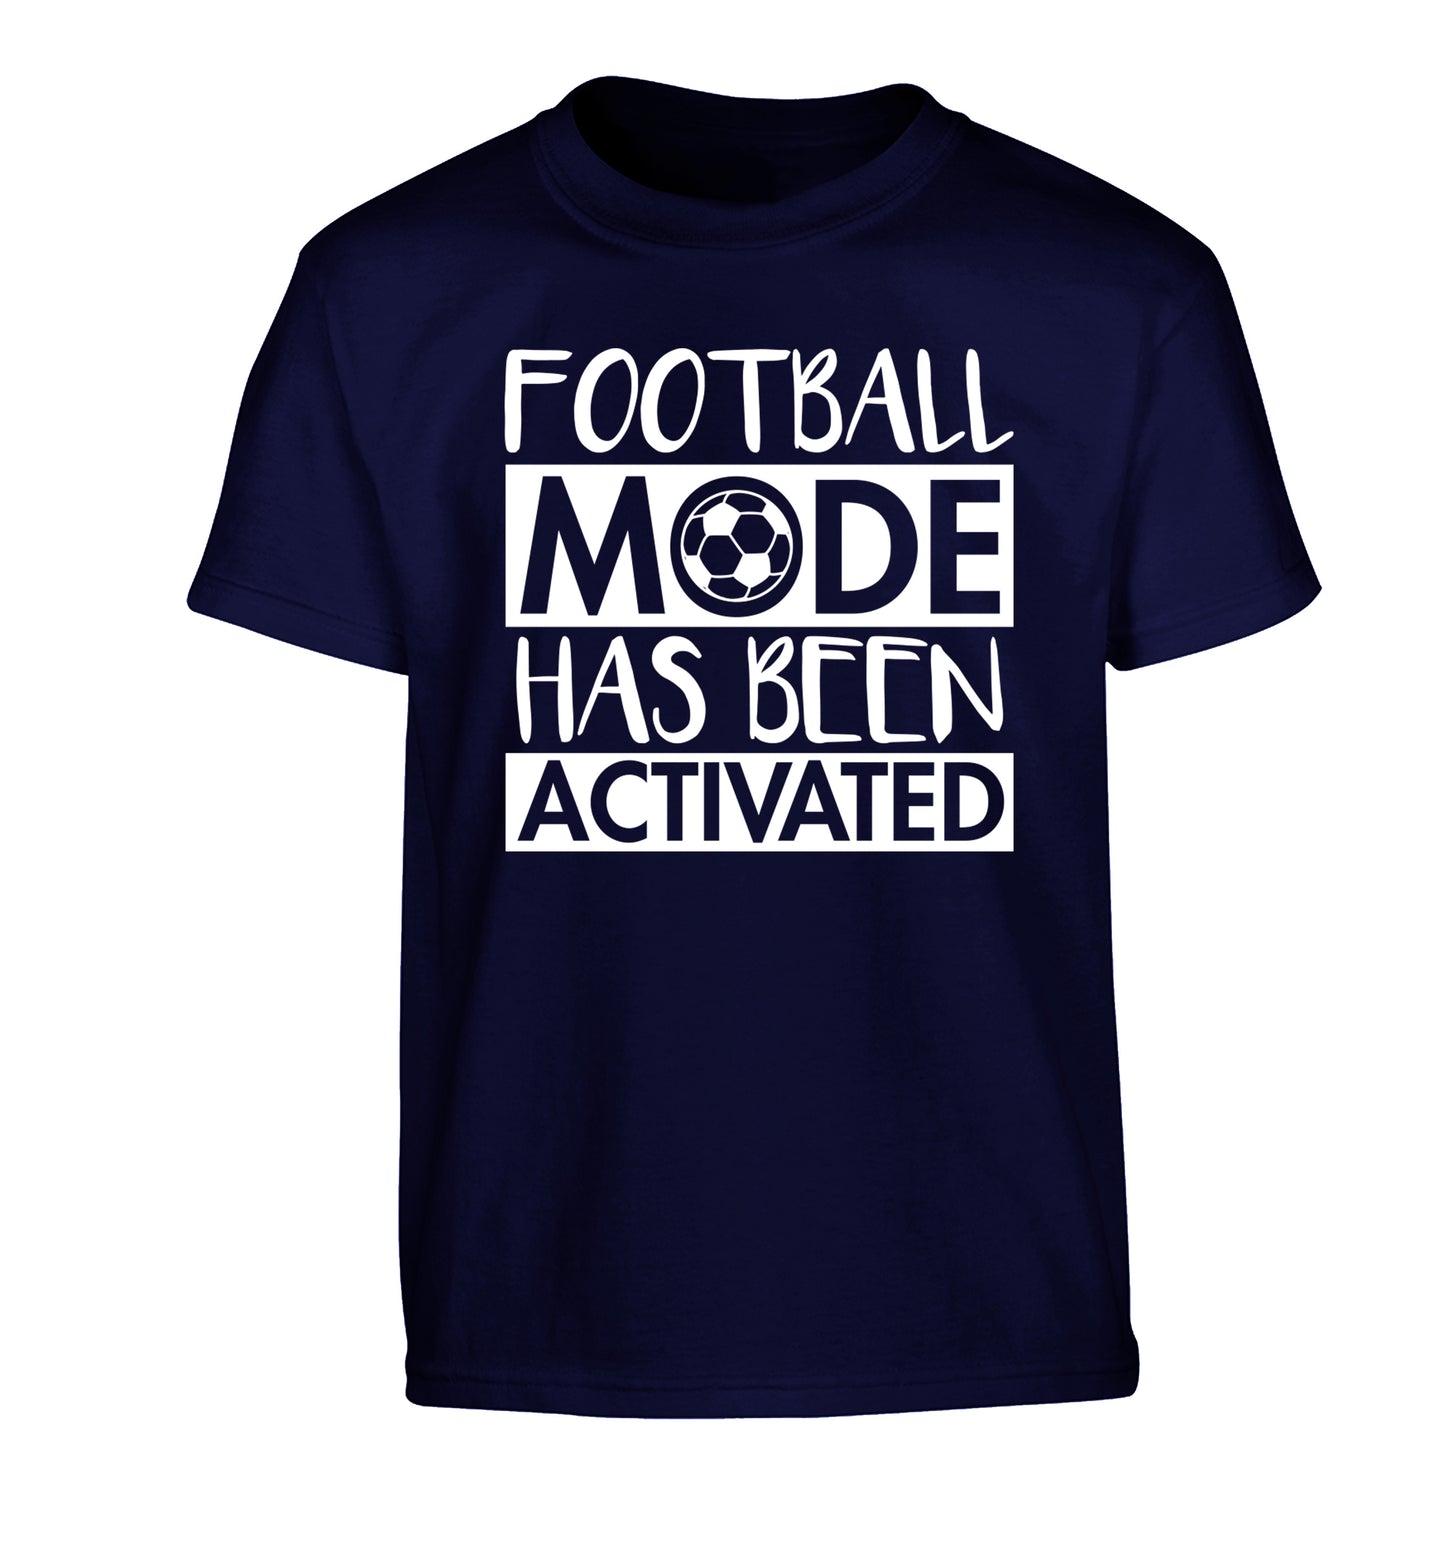 Football mode has been activated Children's navy Tshirt 12-14 Years